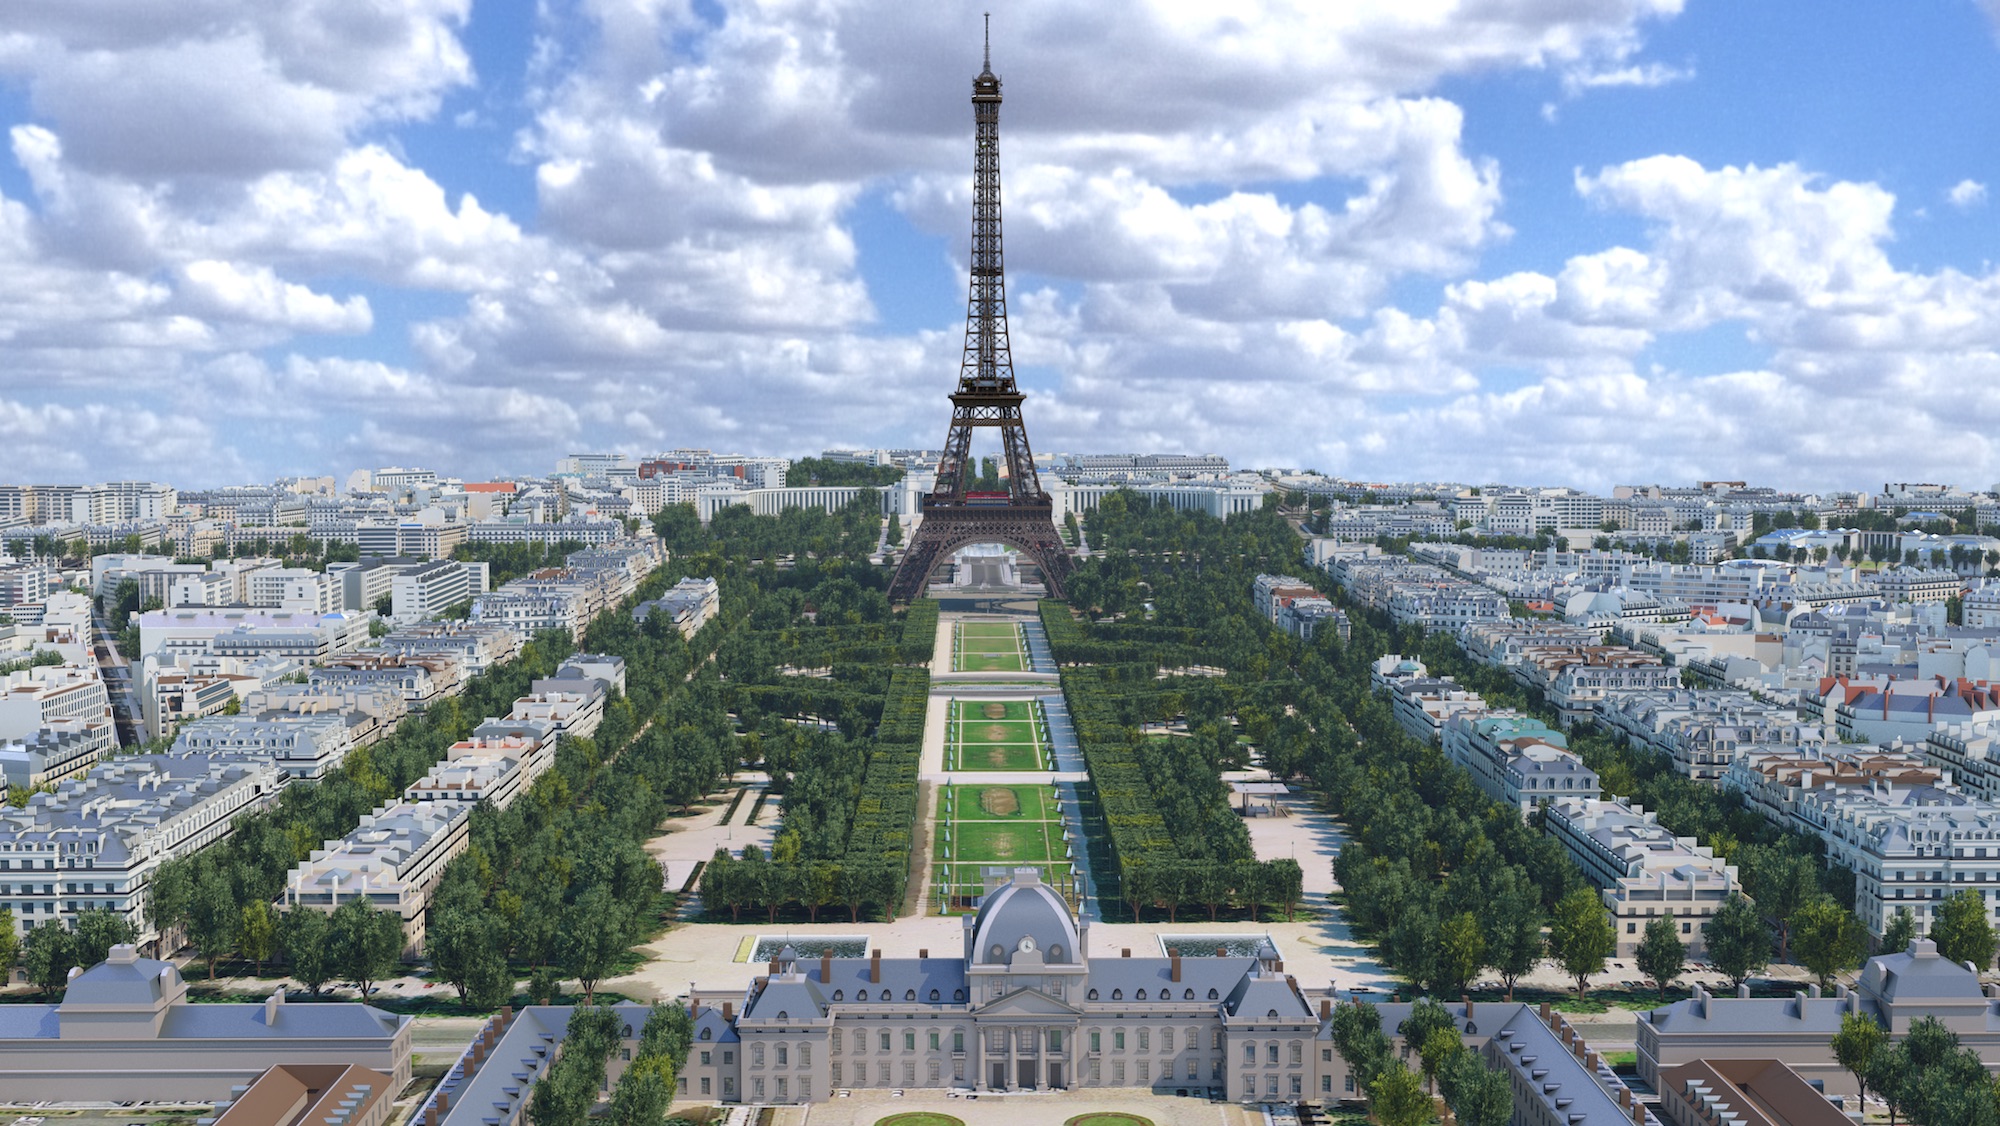 Reimagining The Eiffel Tower Landscape Autodesk Partners With The City Of Paris